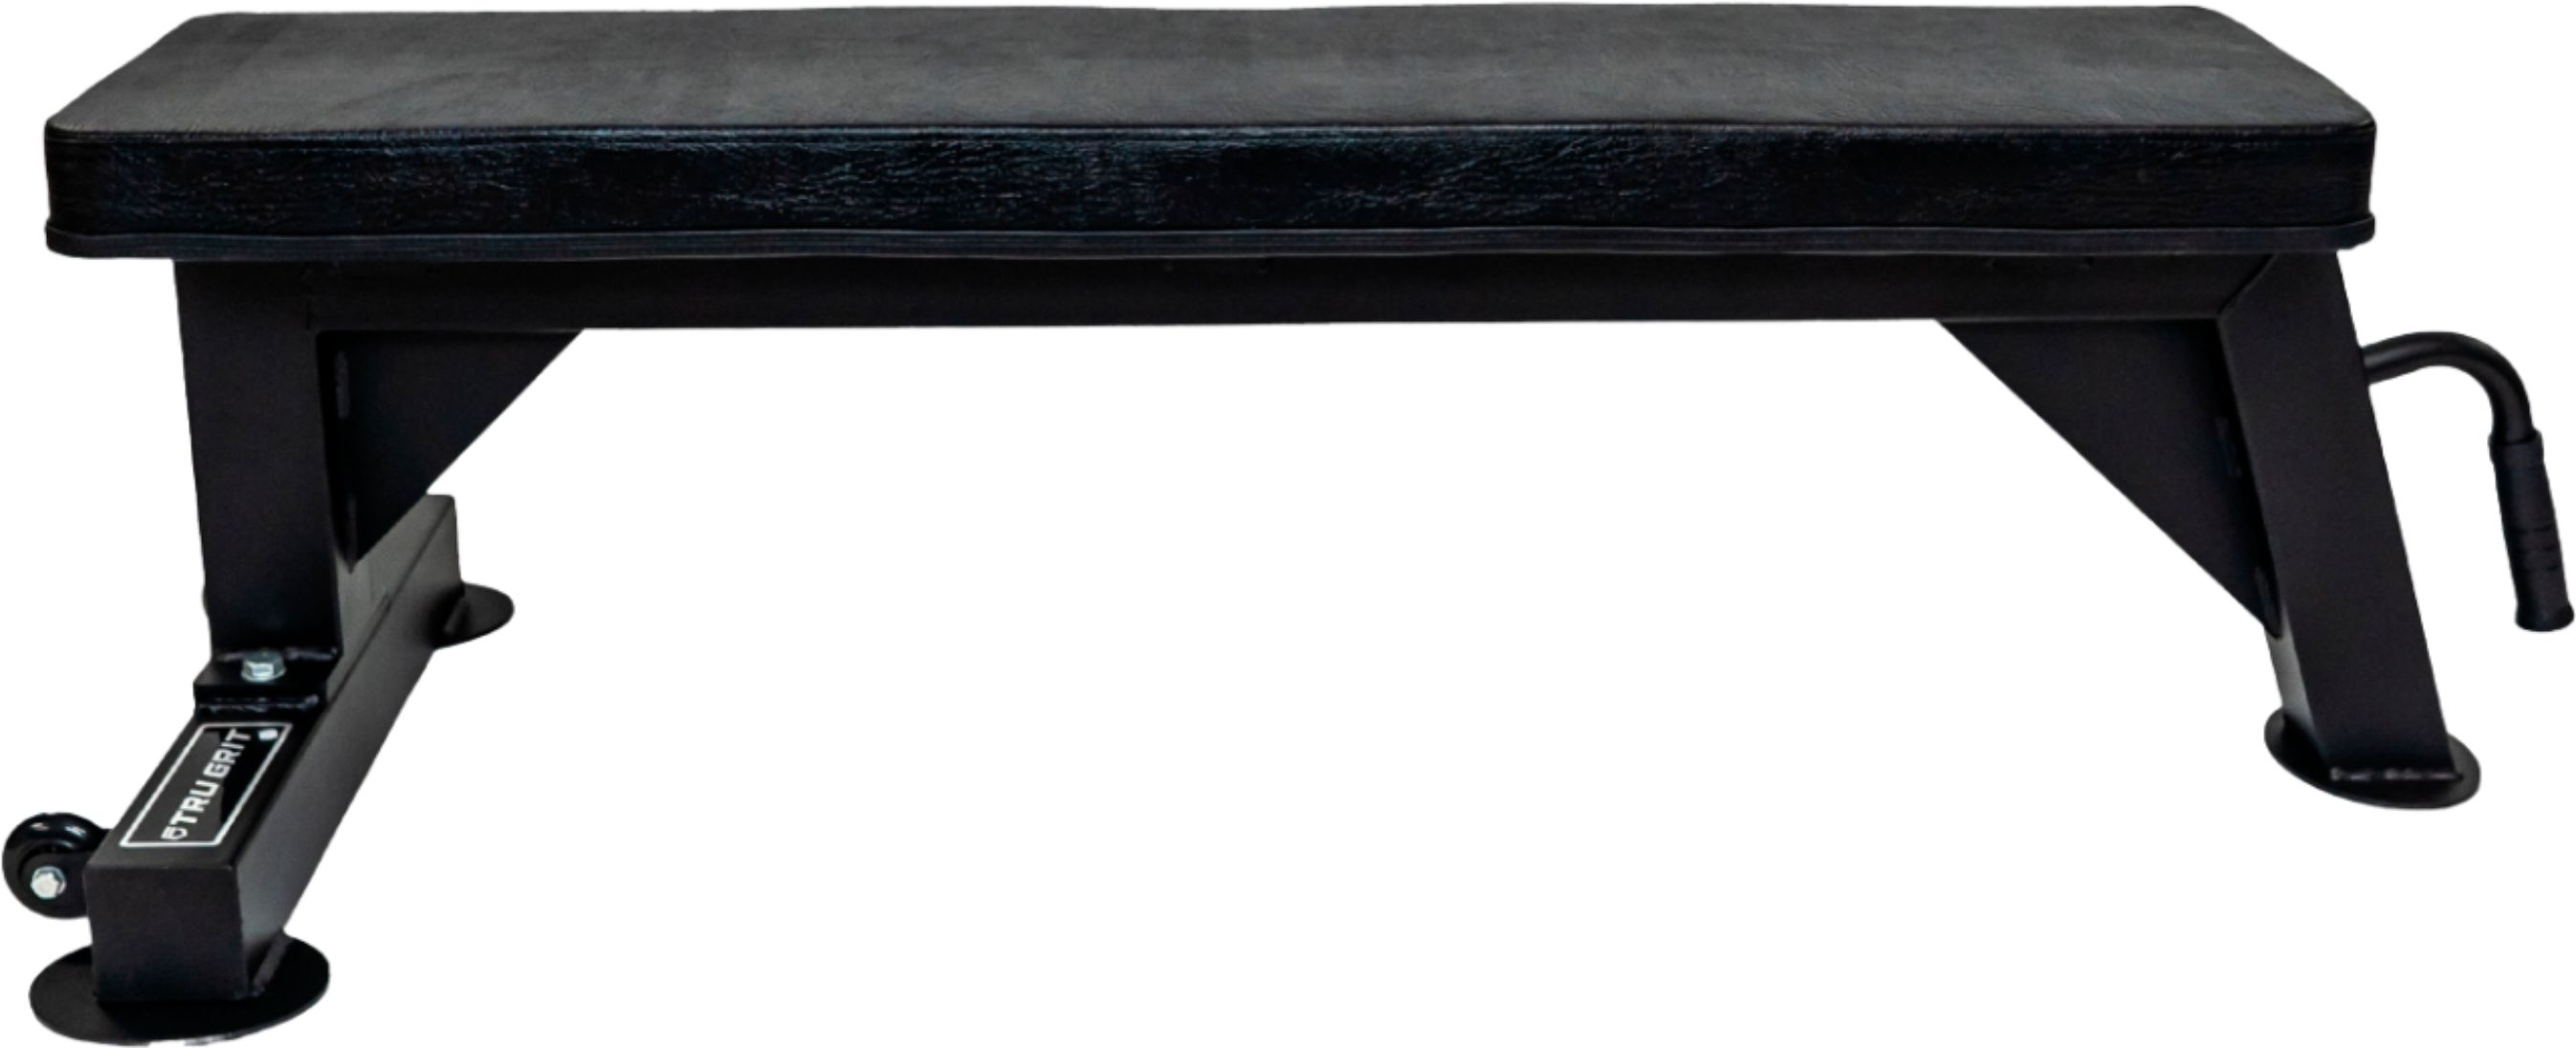 Best Buy: Tru Grit Flat Utility Power Bench Black BNCH1001